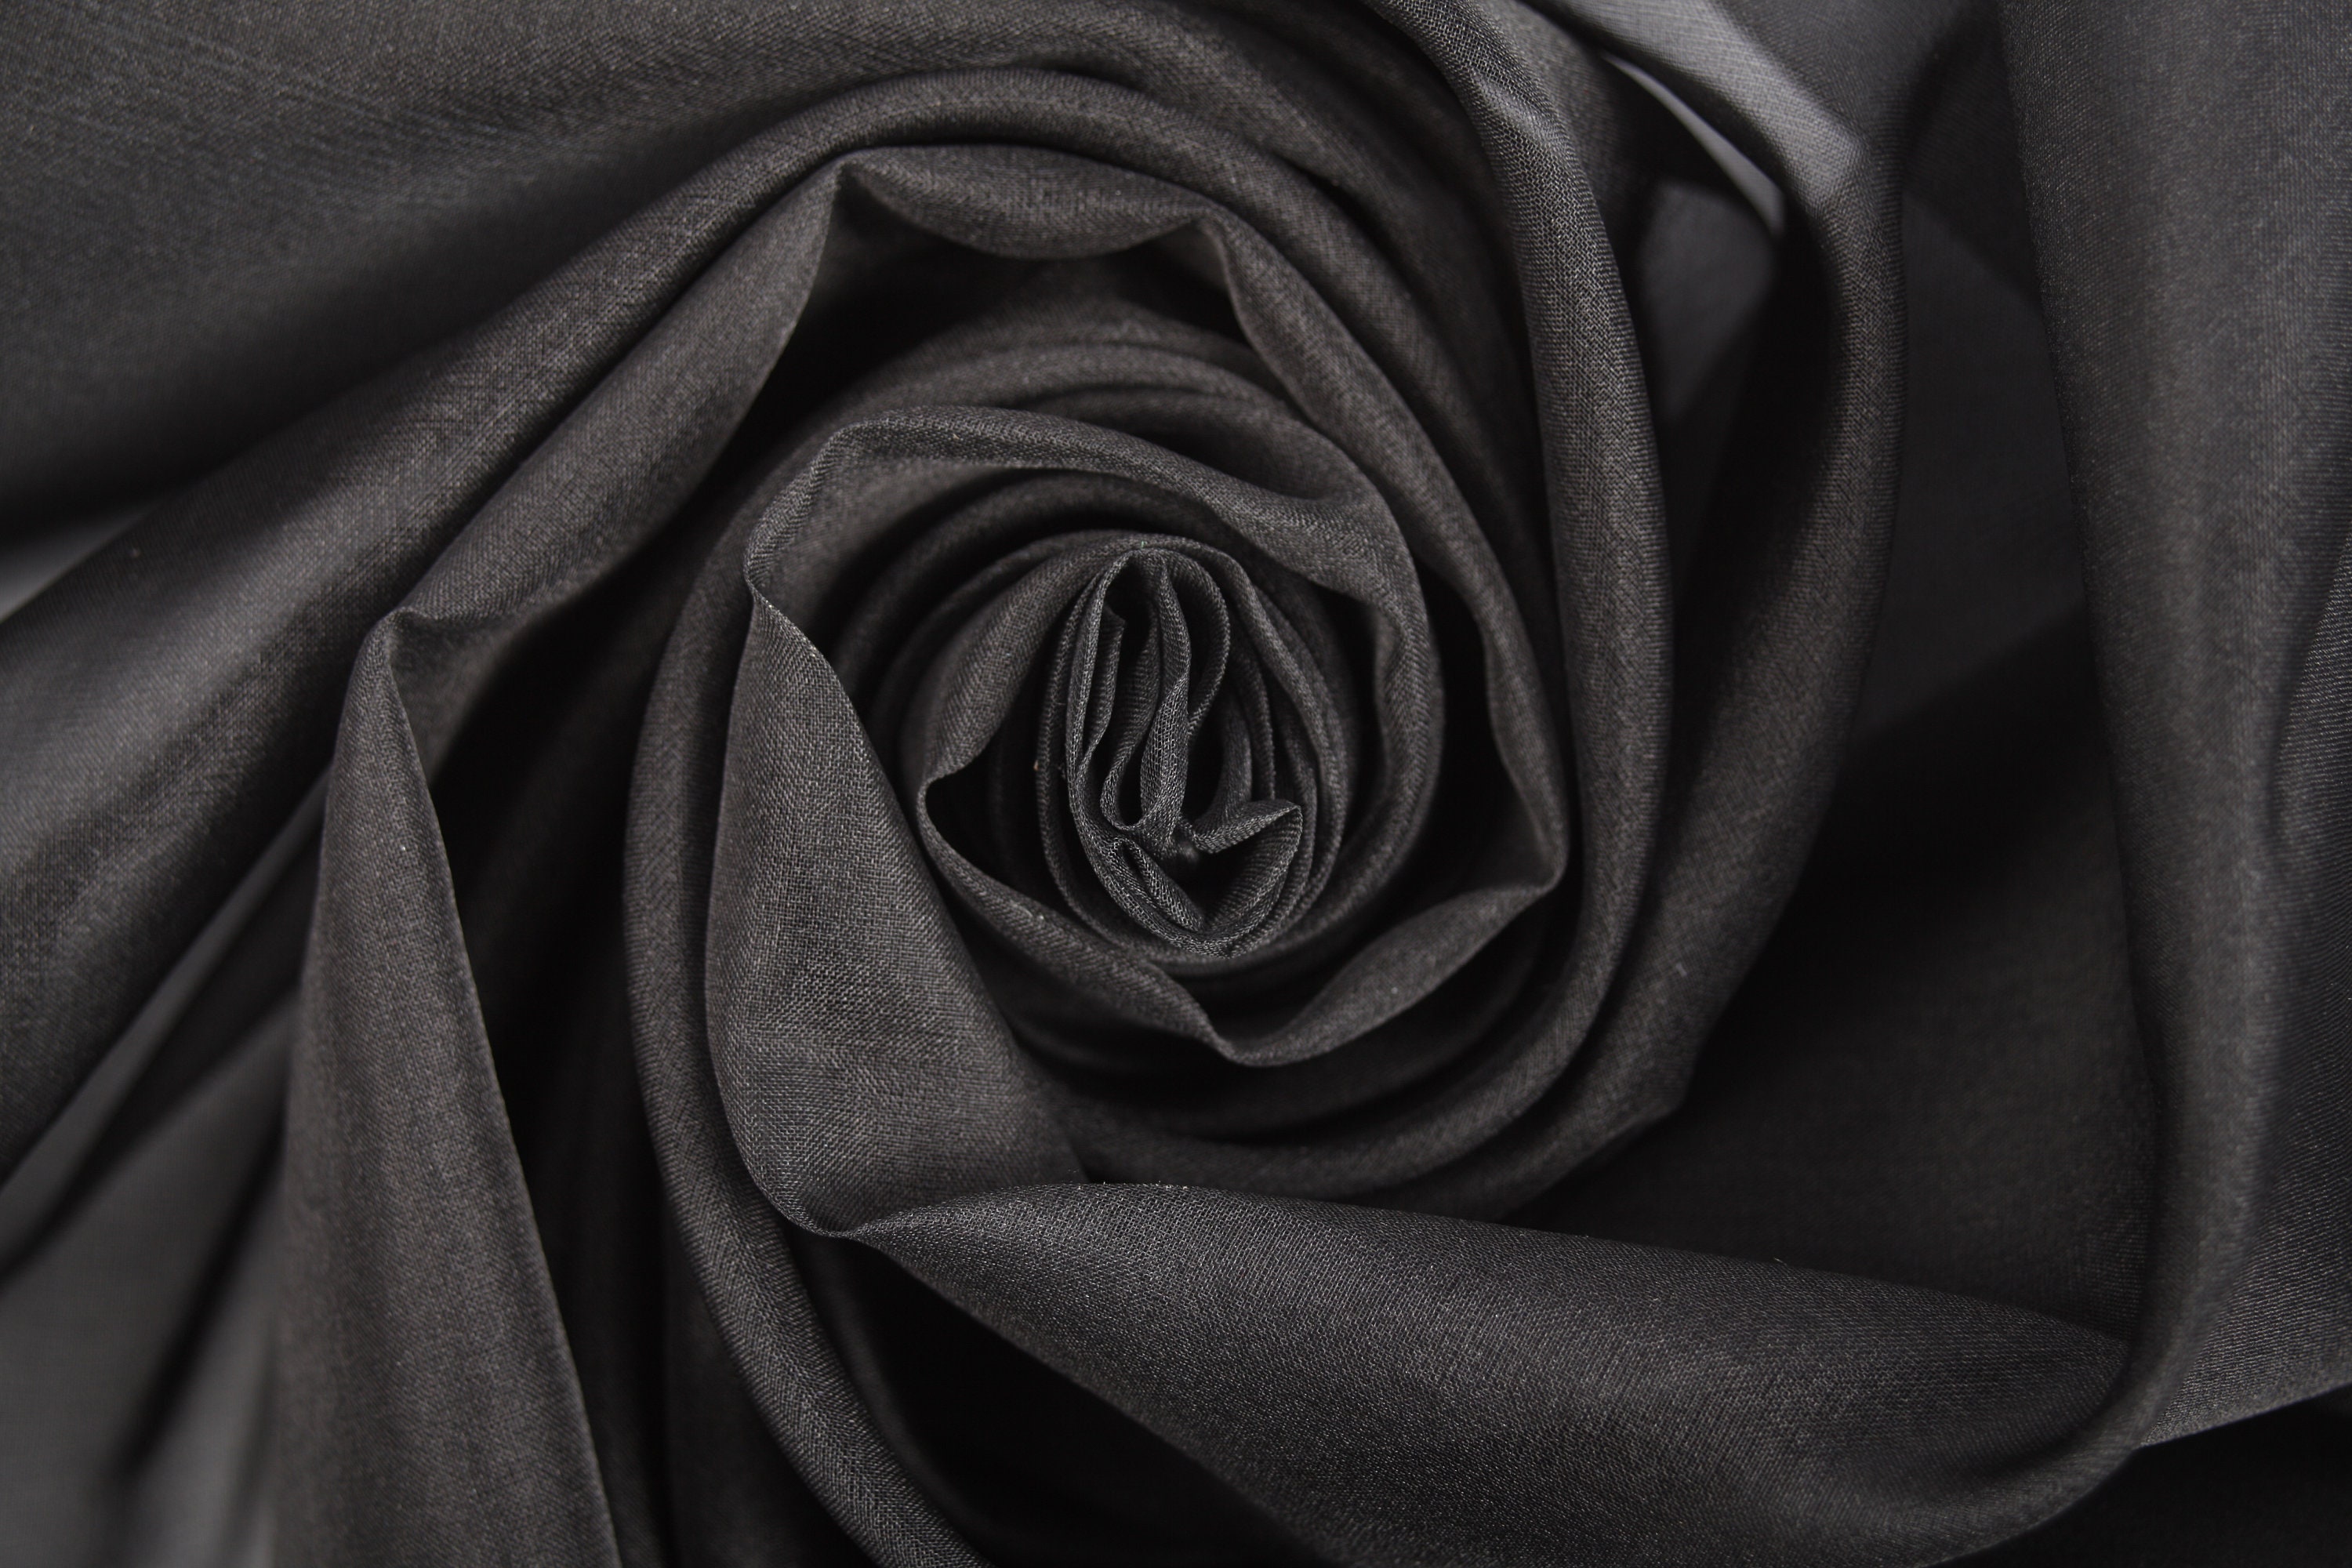 Silk Organza Fabric: 100% Silk Fabrics from France by Belinac, SKU 00026155  at $64 — Buy Silk Fabrics Online